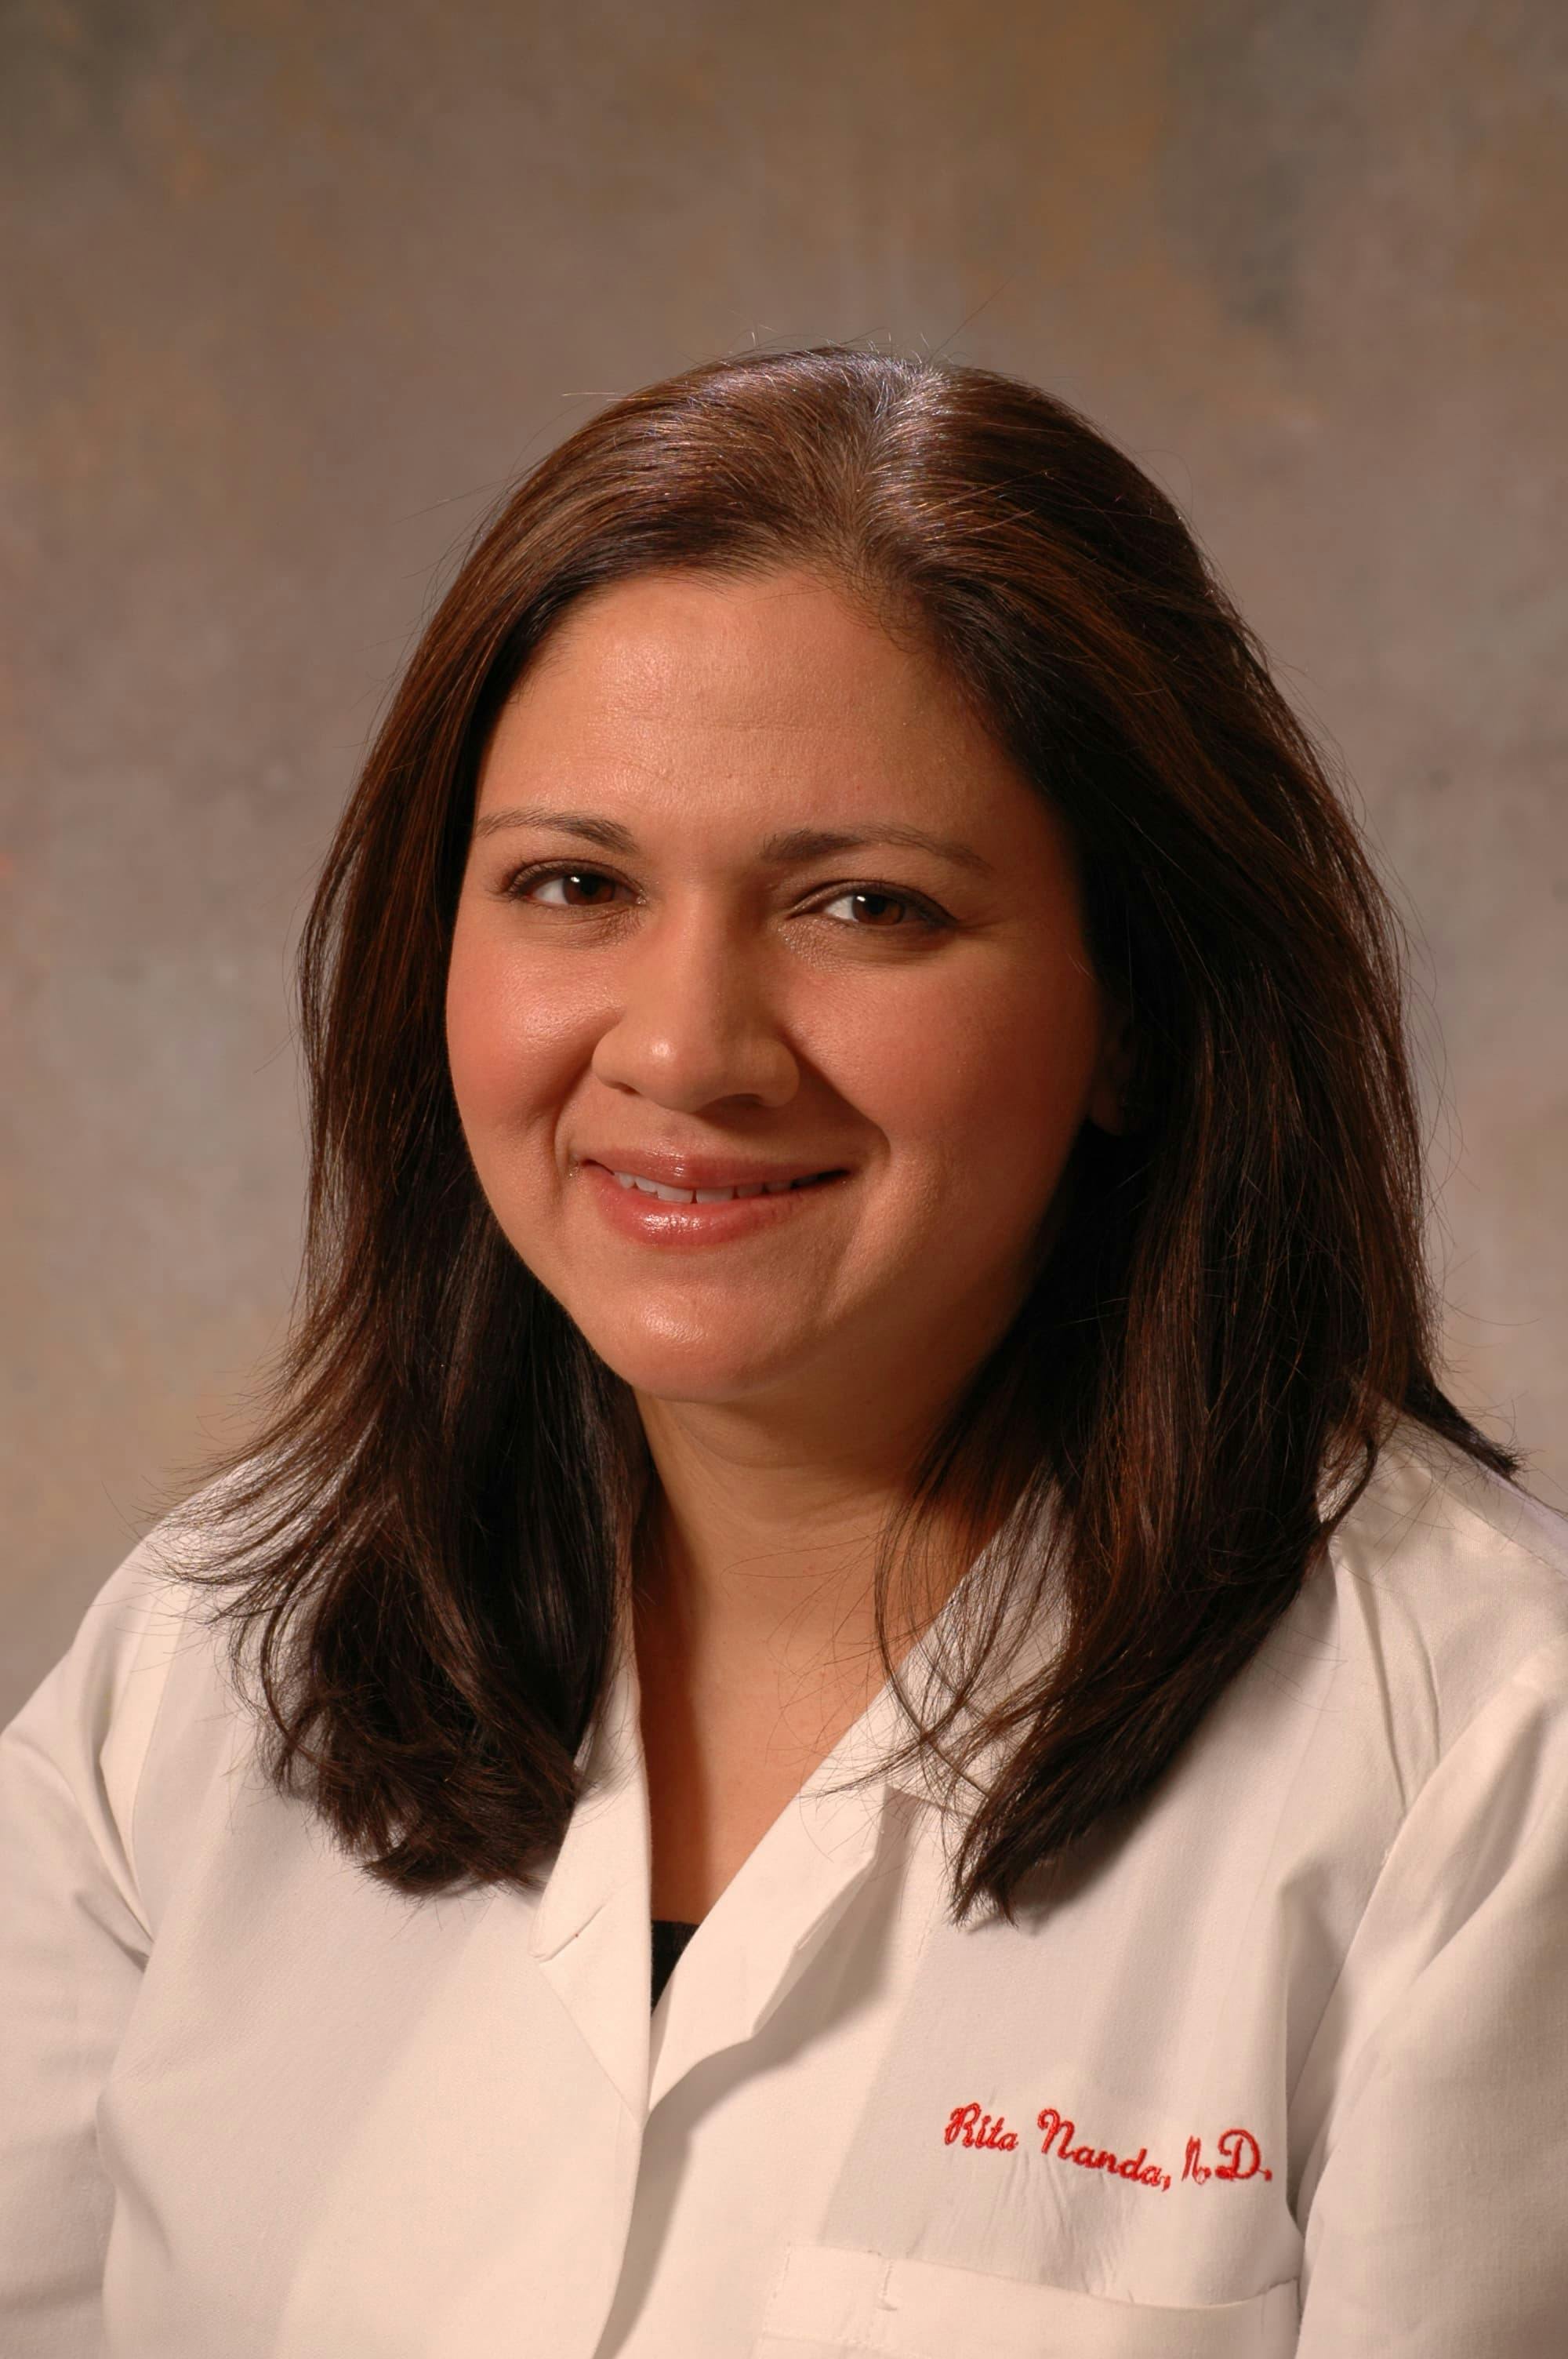 Rita Nanda, MD (Moderator)

Director, Breast Oncology

Associate Professor of Medicine

University of Chicago

Chicago, IL